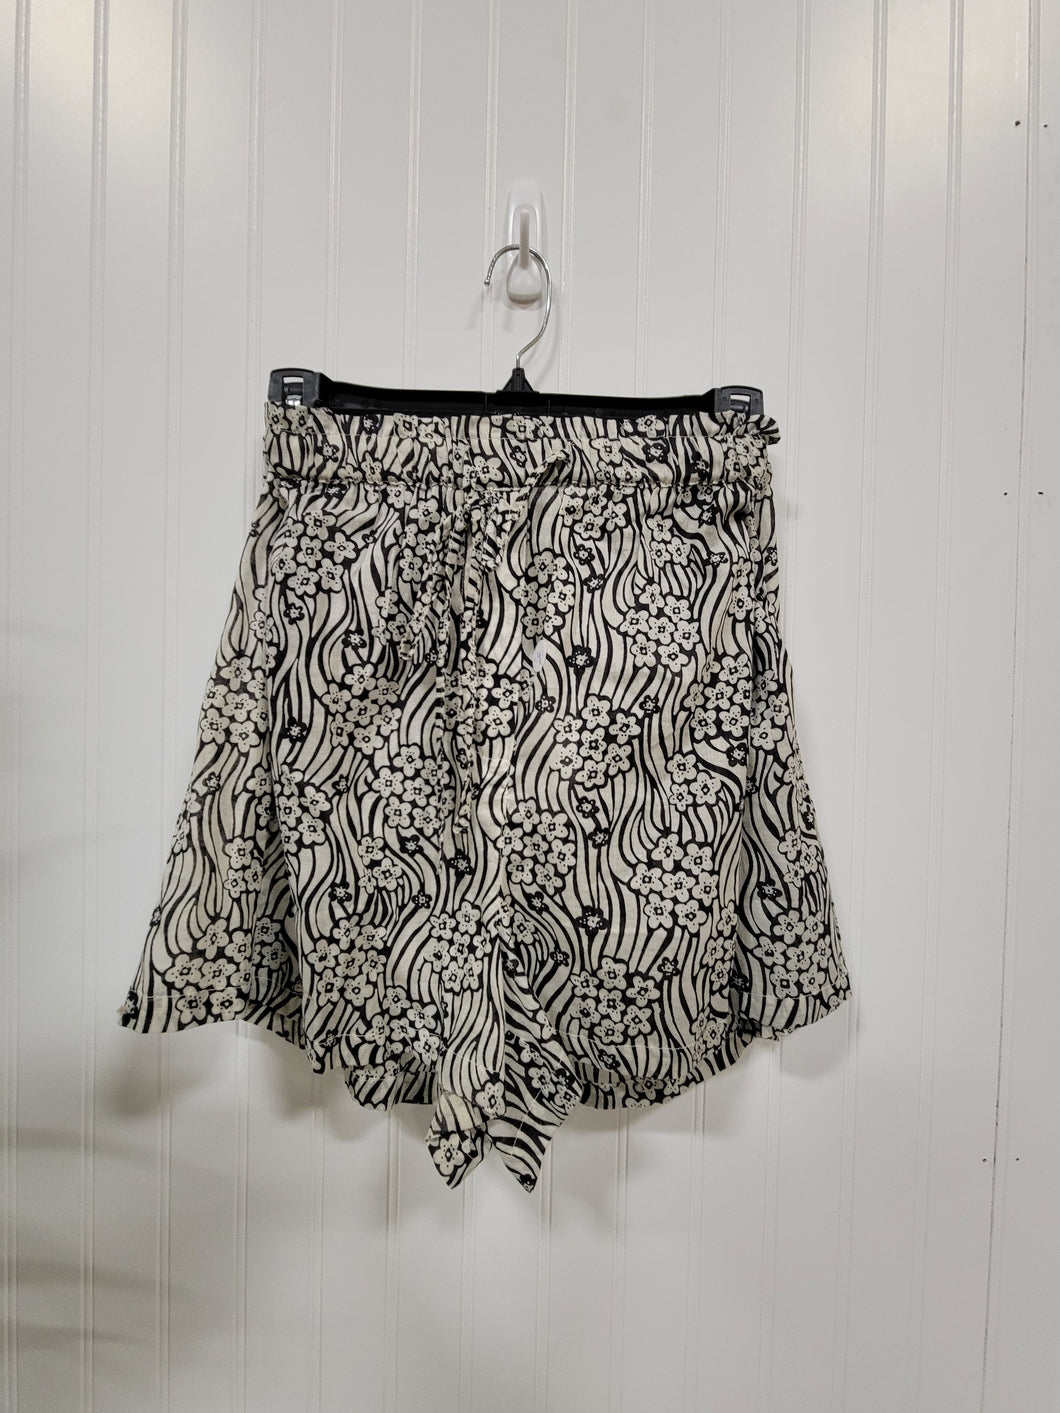 Tan & Black Floral Shorts